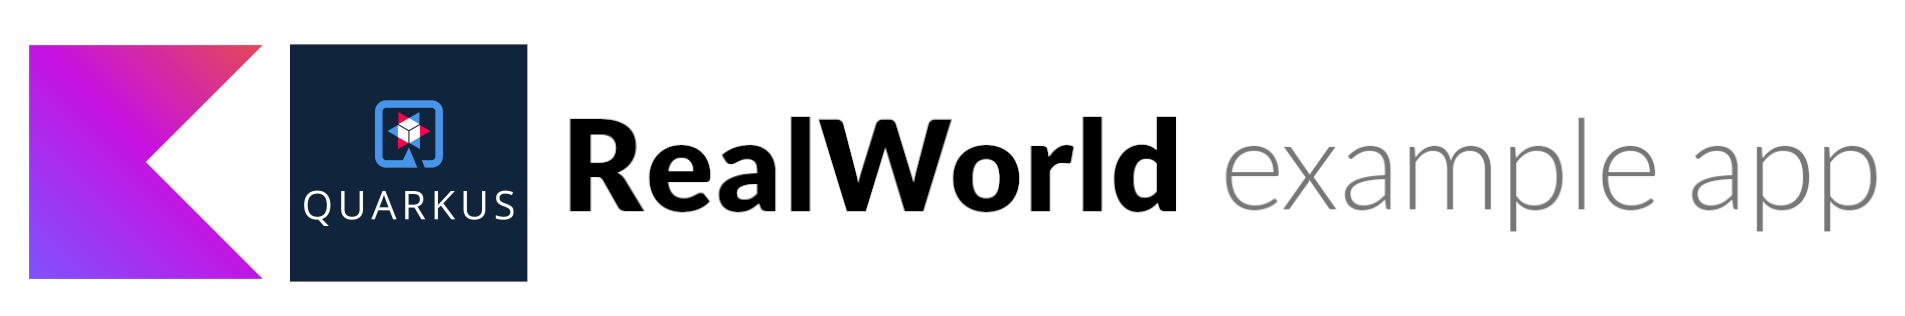 RealWorld Example App